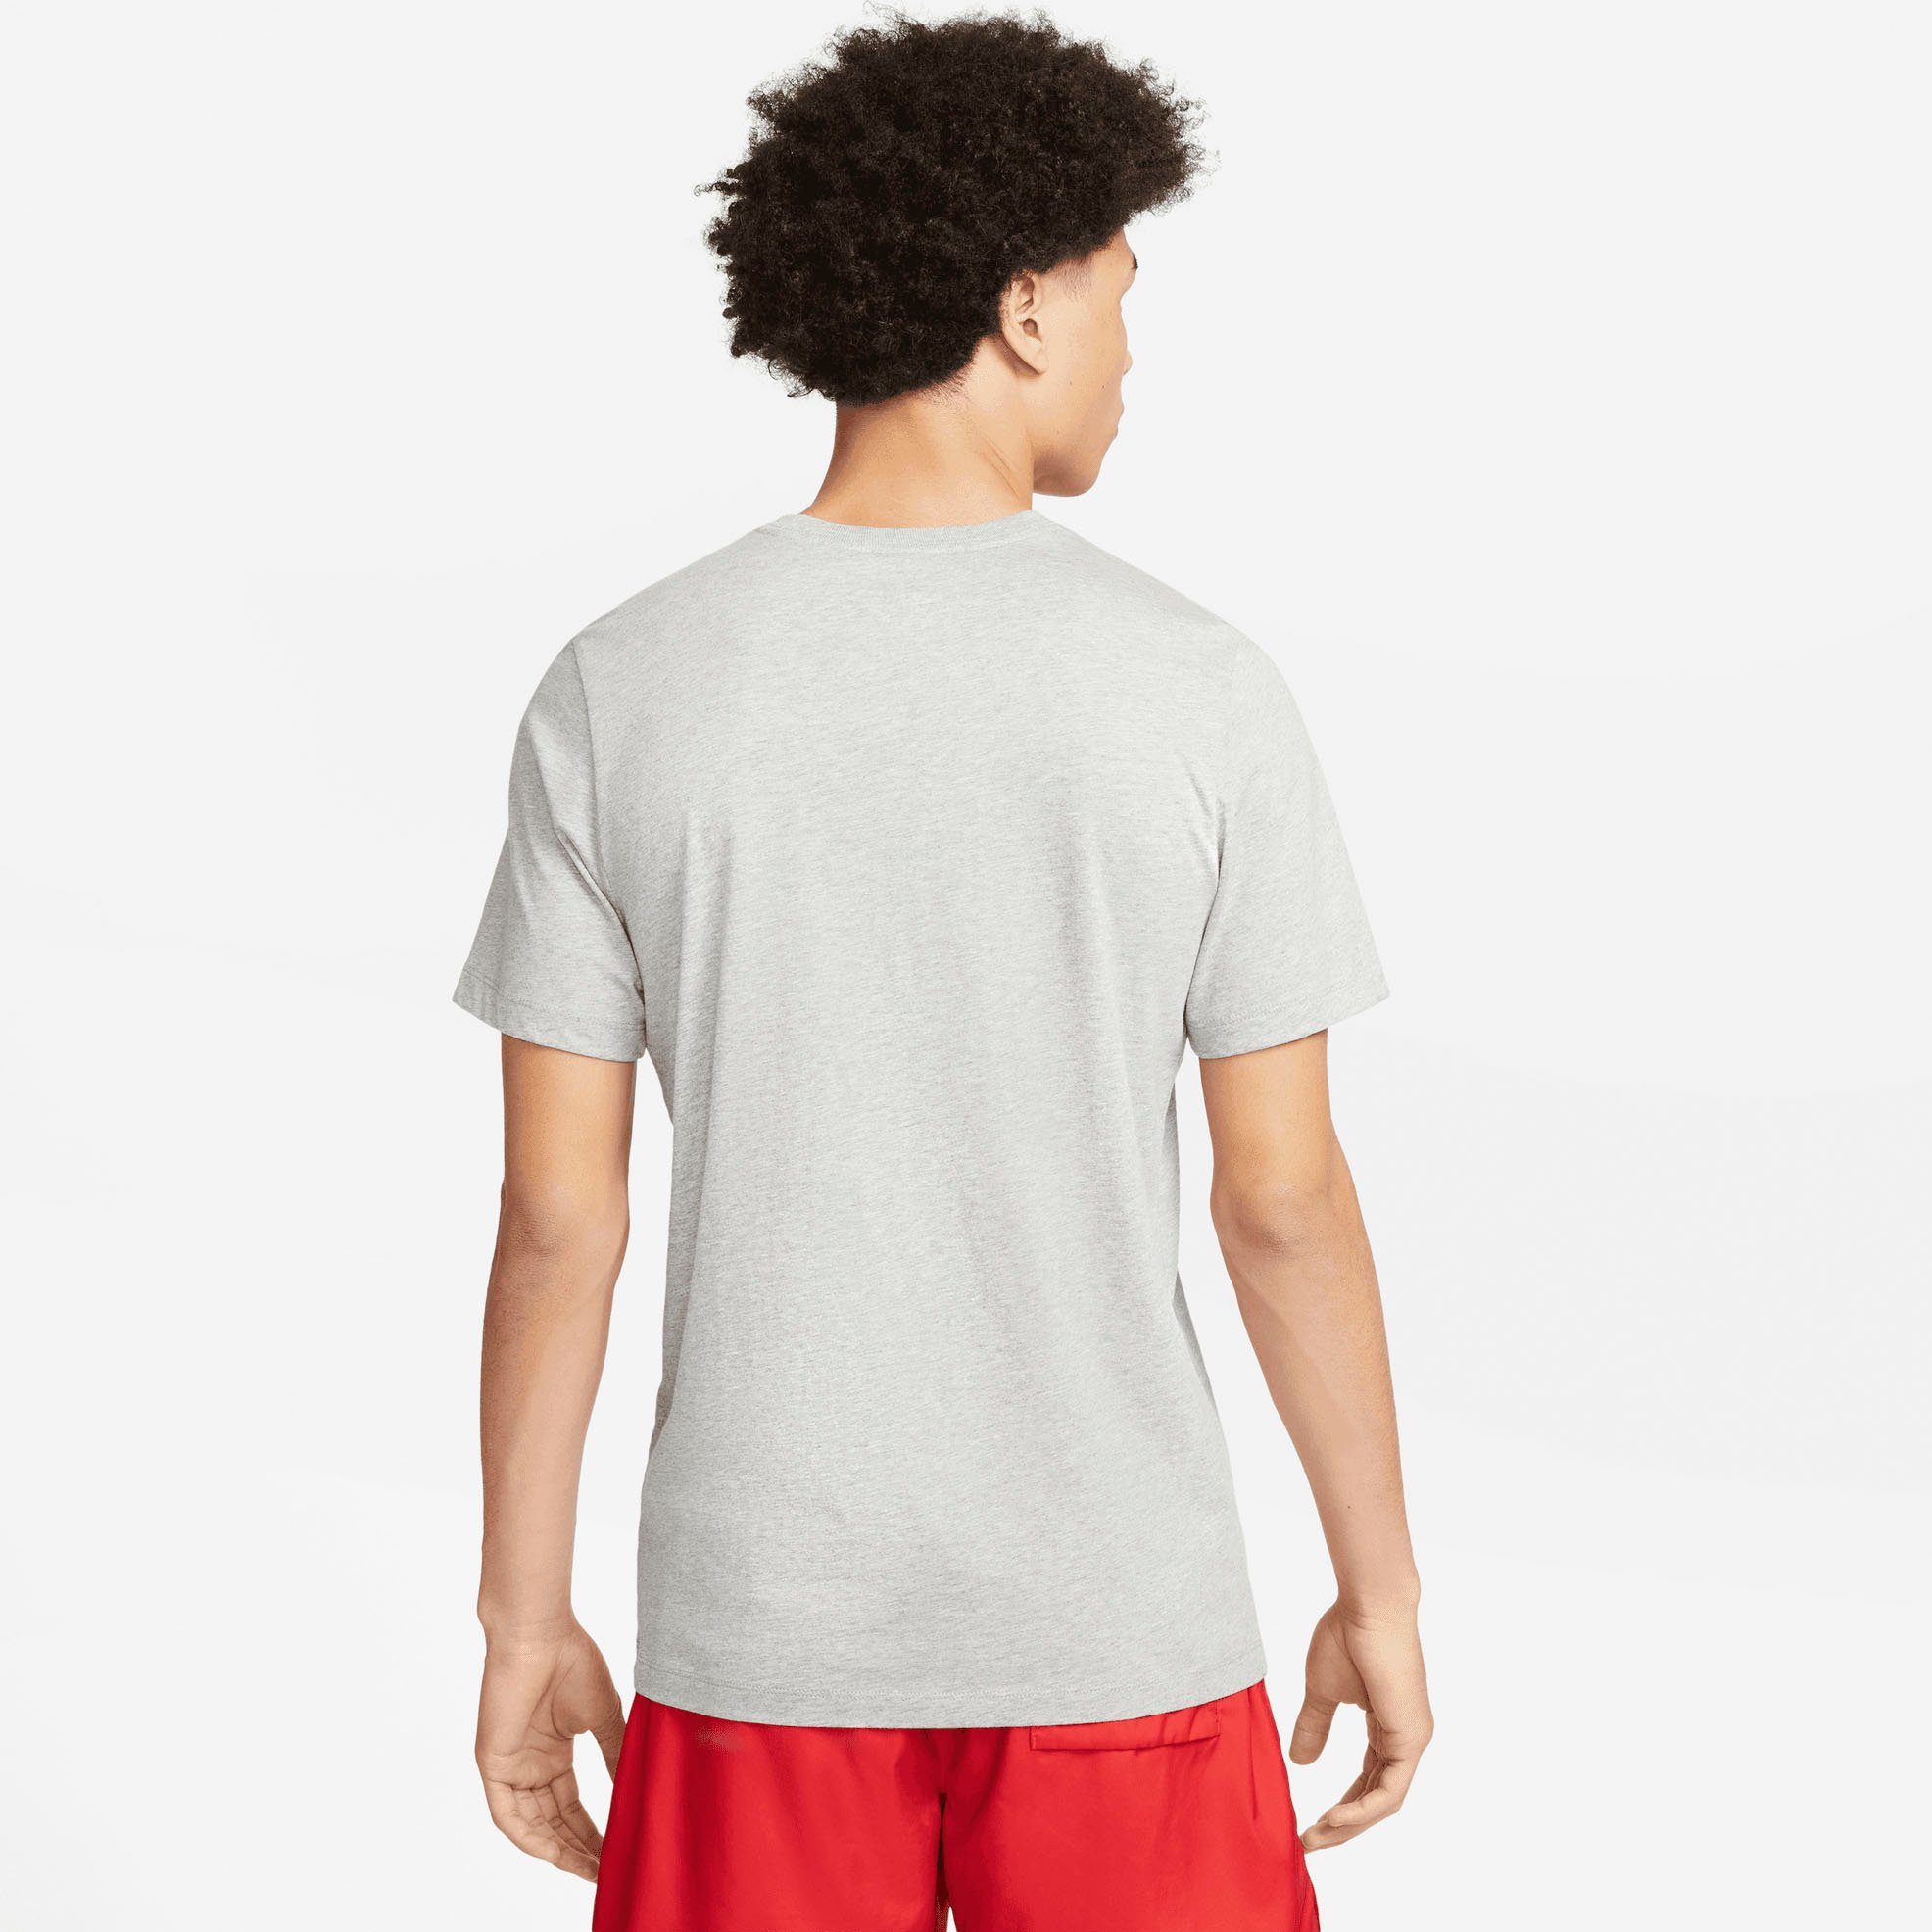 Nike Sportswear GREY T-Shirt HEATHER DK Men's T-Shirt